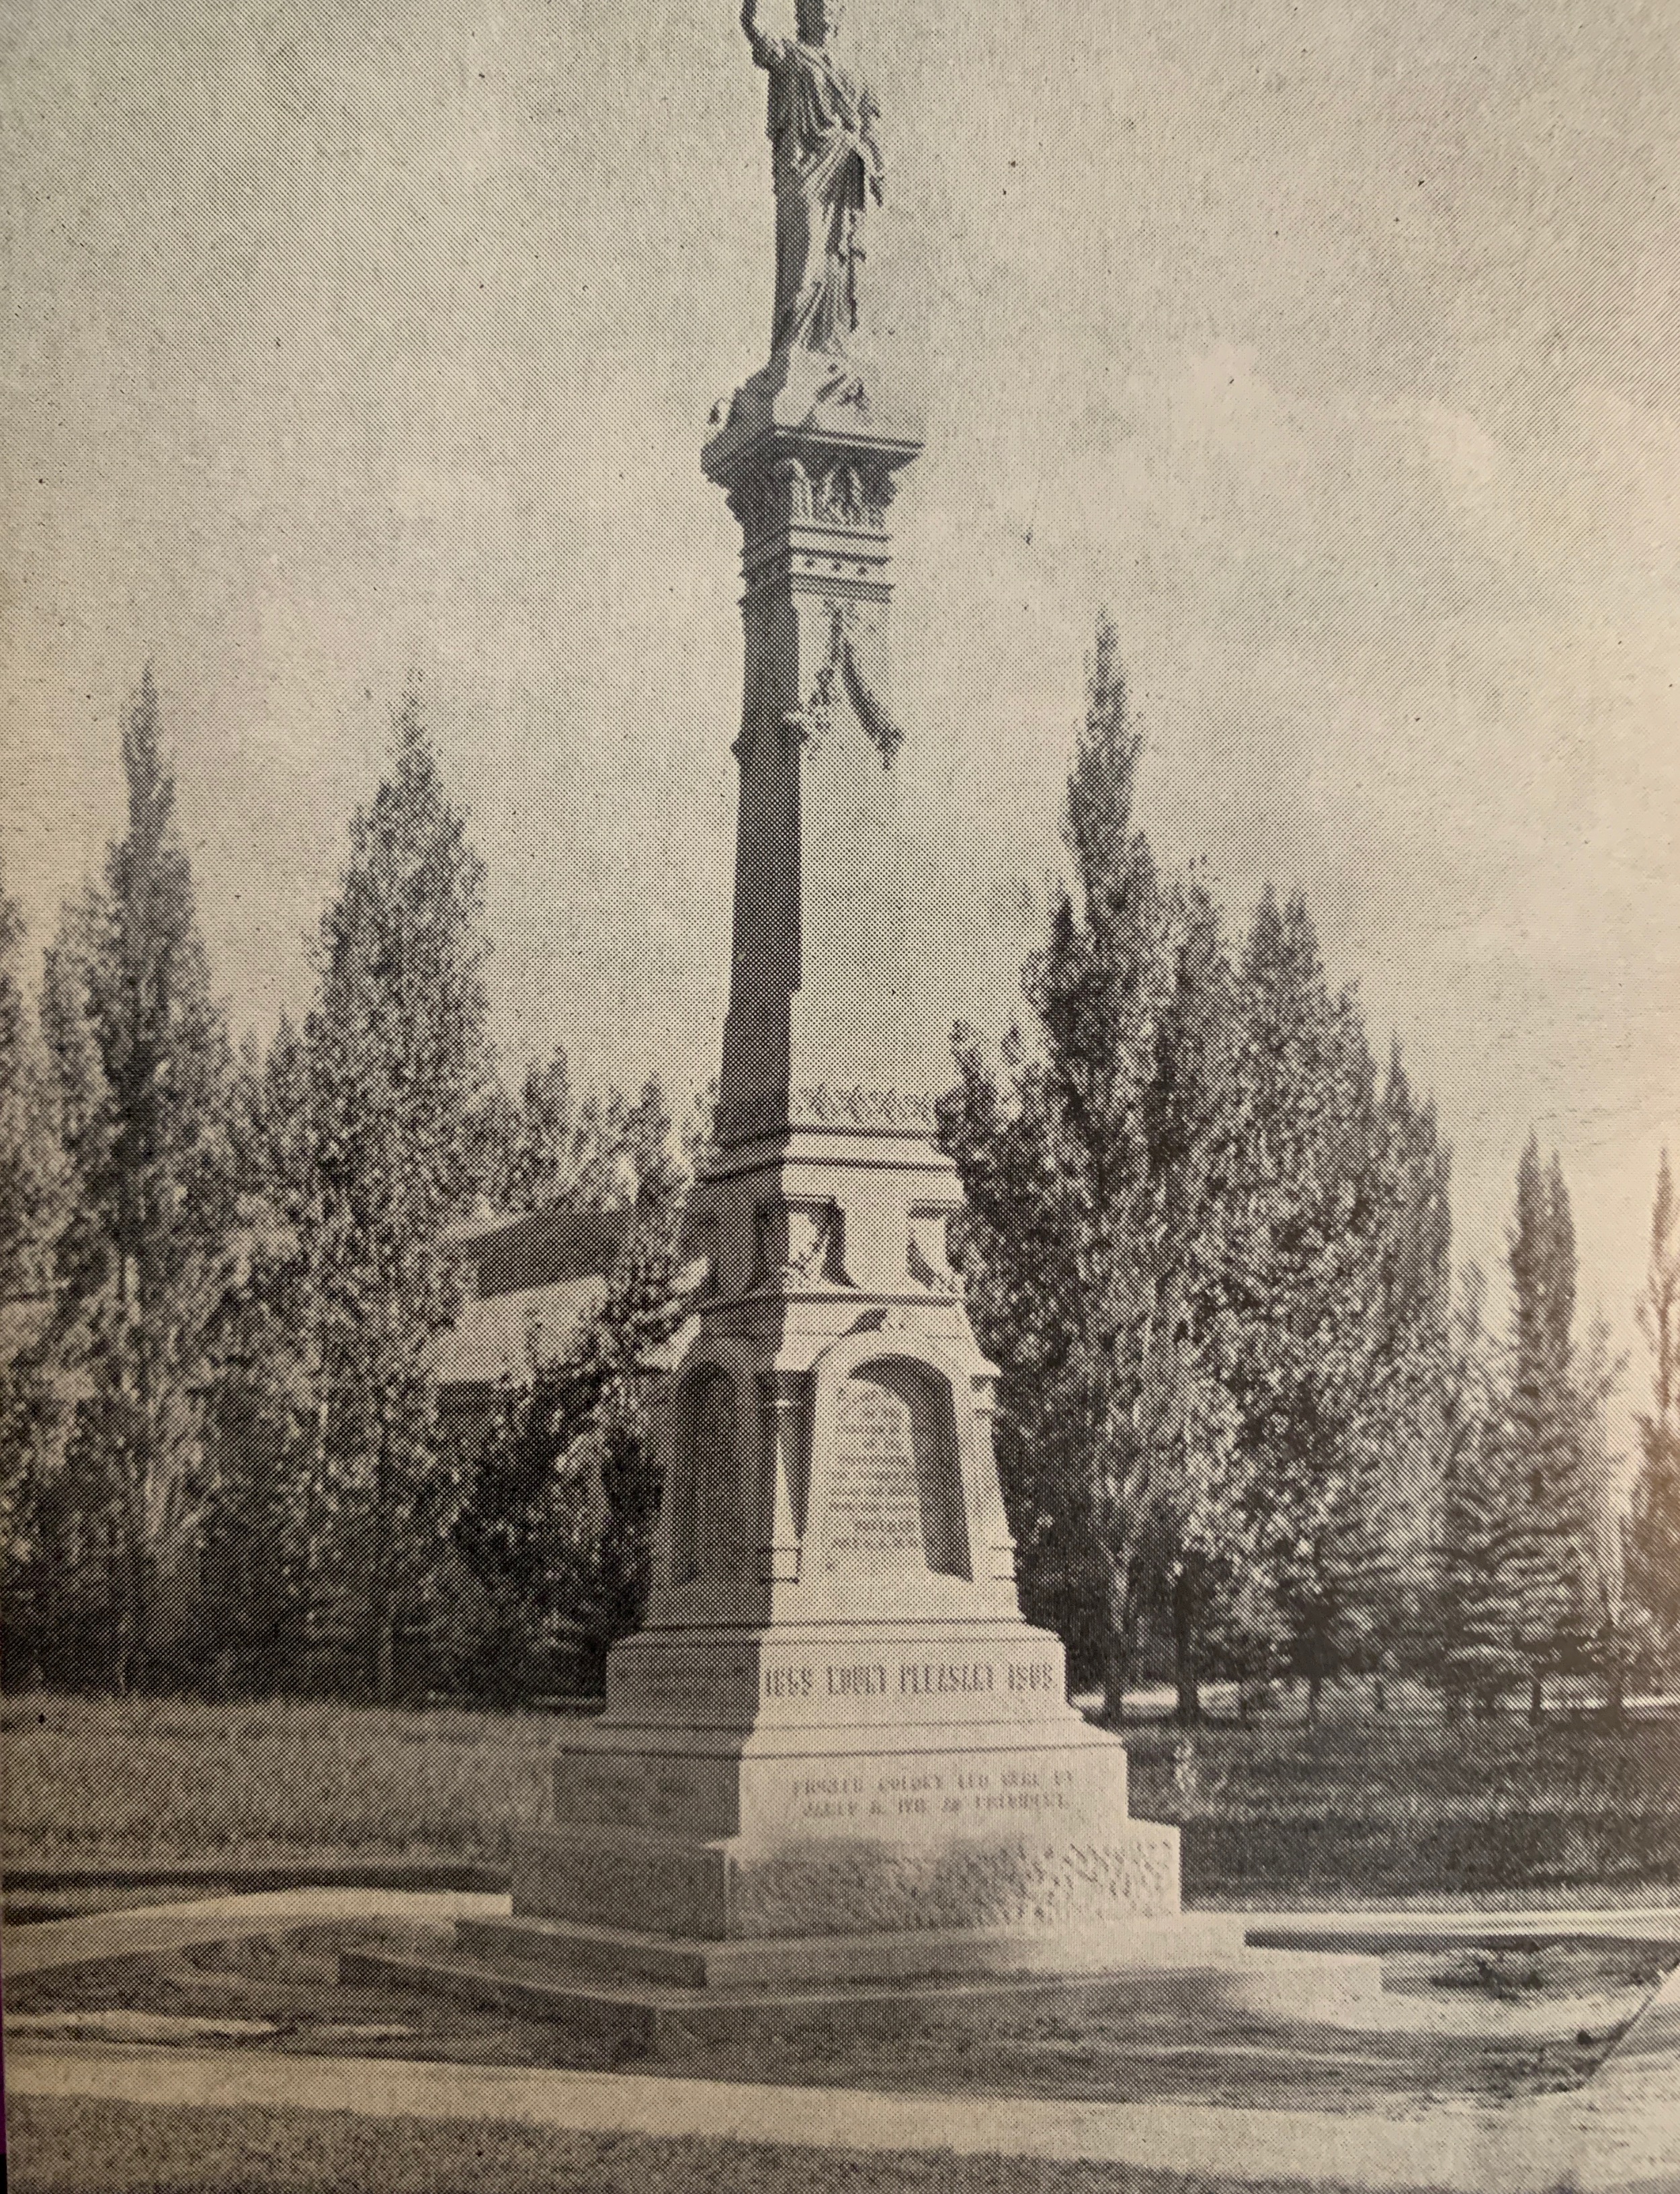 Pioneer Monument erected in 1909 the 50th anniversary of Mt Pleasant, UT. Ancestors were;
MC Christensen
Peter Johansen
Mortin Rasmussen
Christian Neilson Christensen